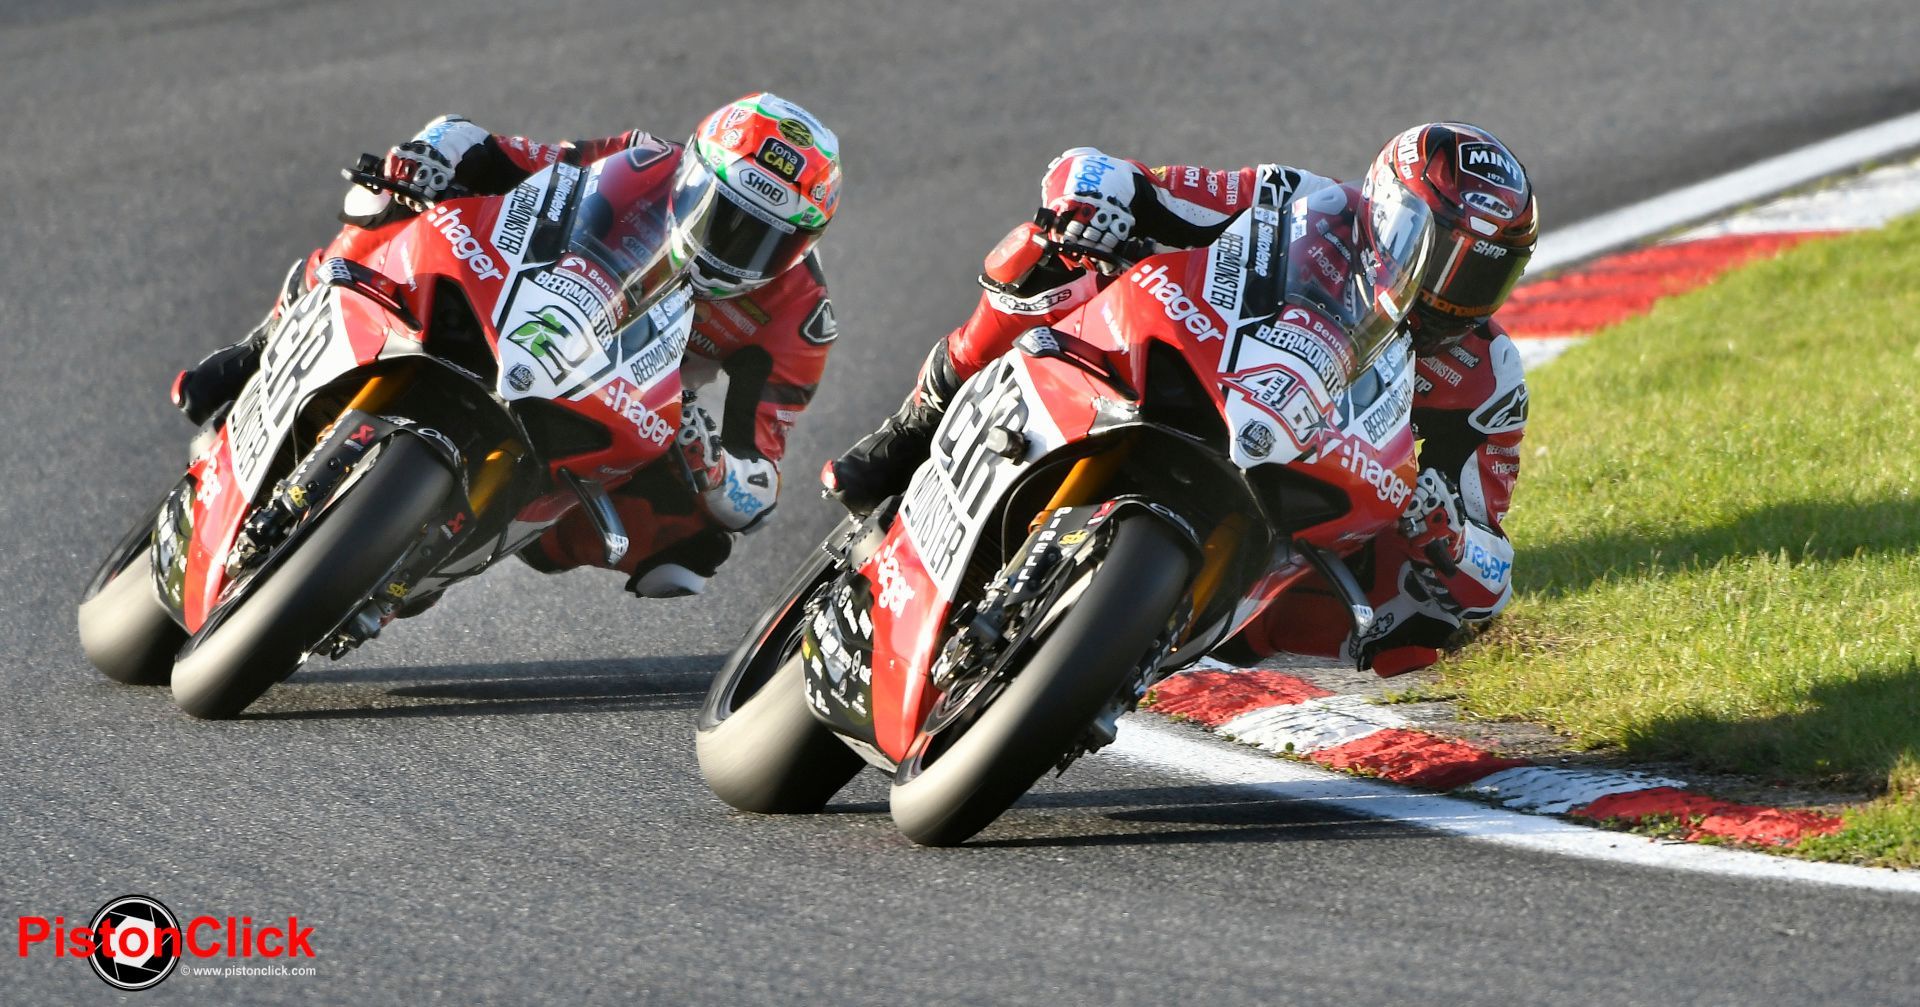 Ducati racing at Brands Hatch